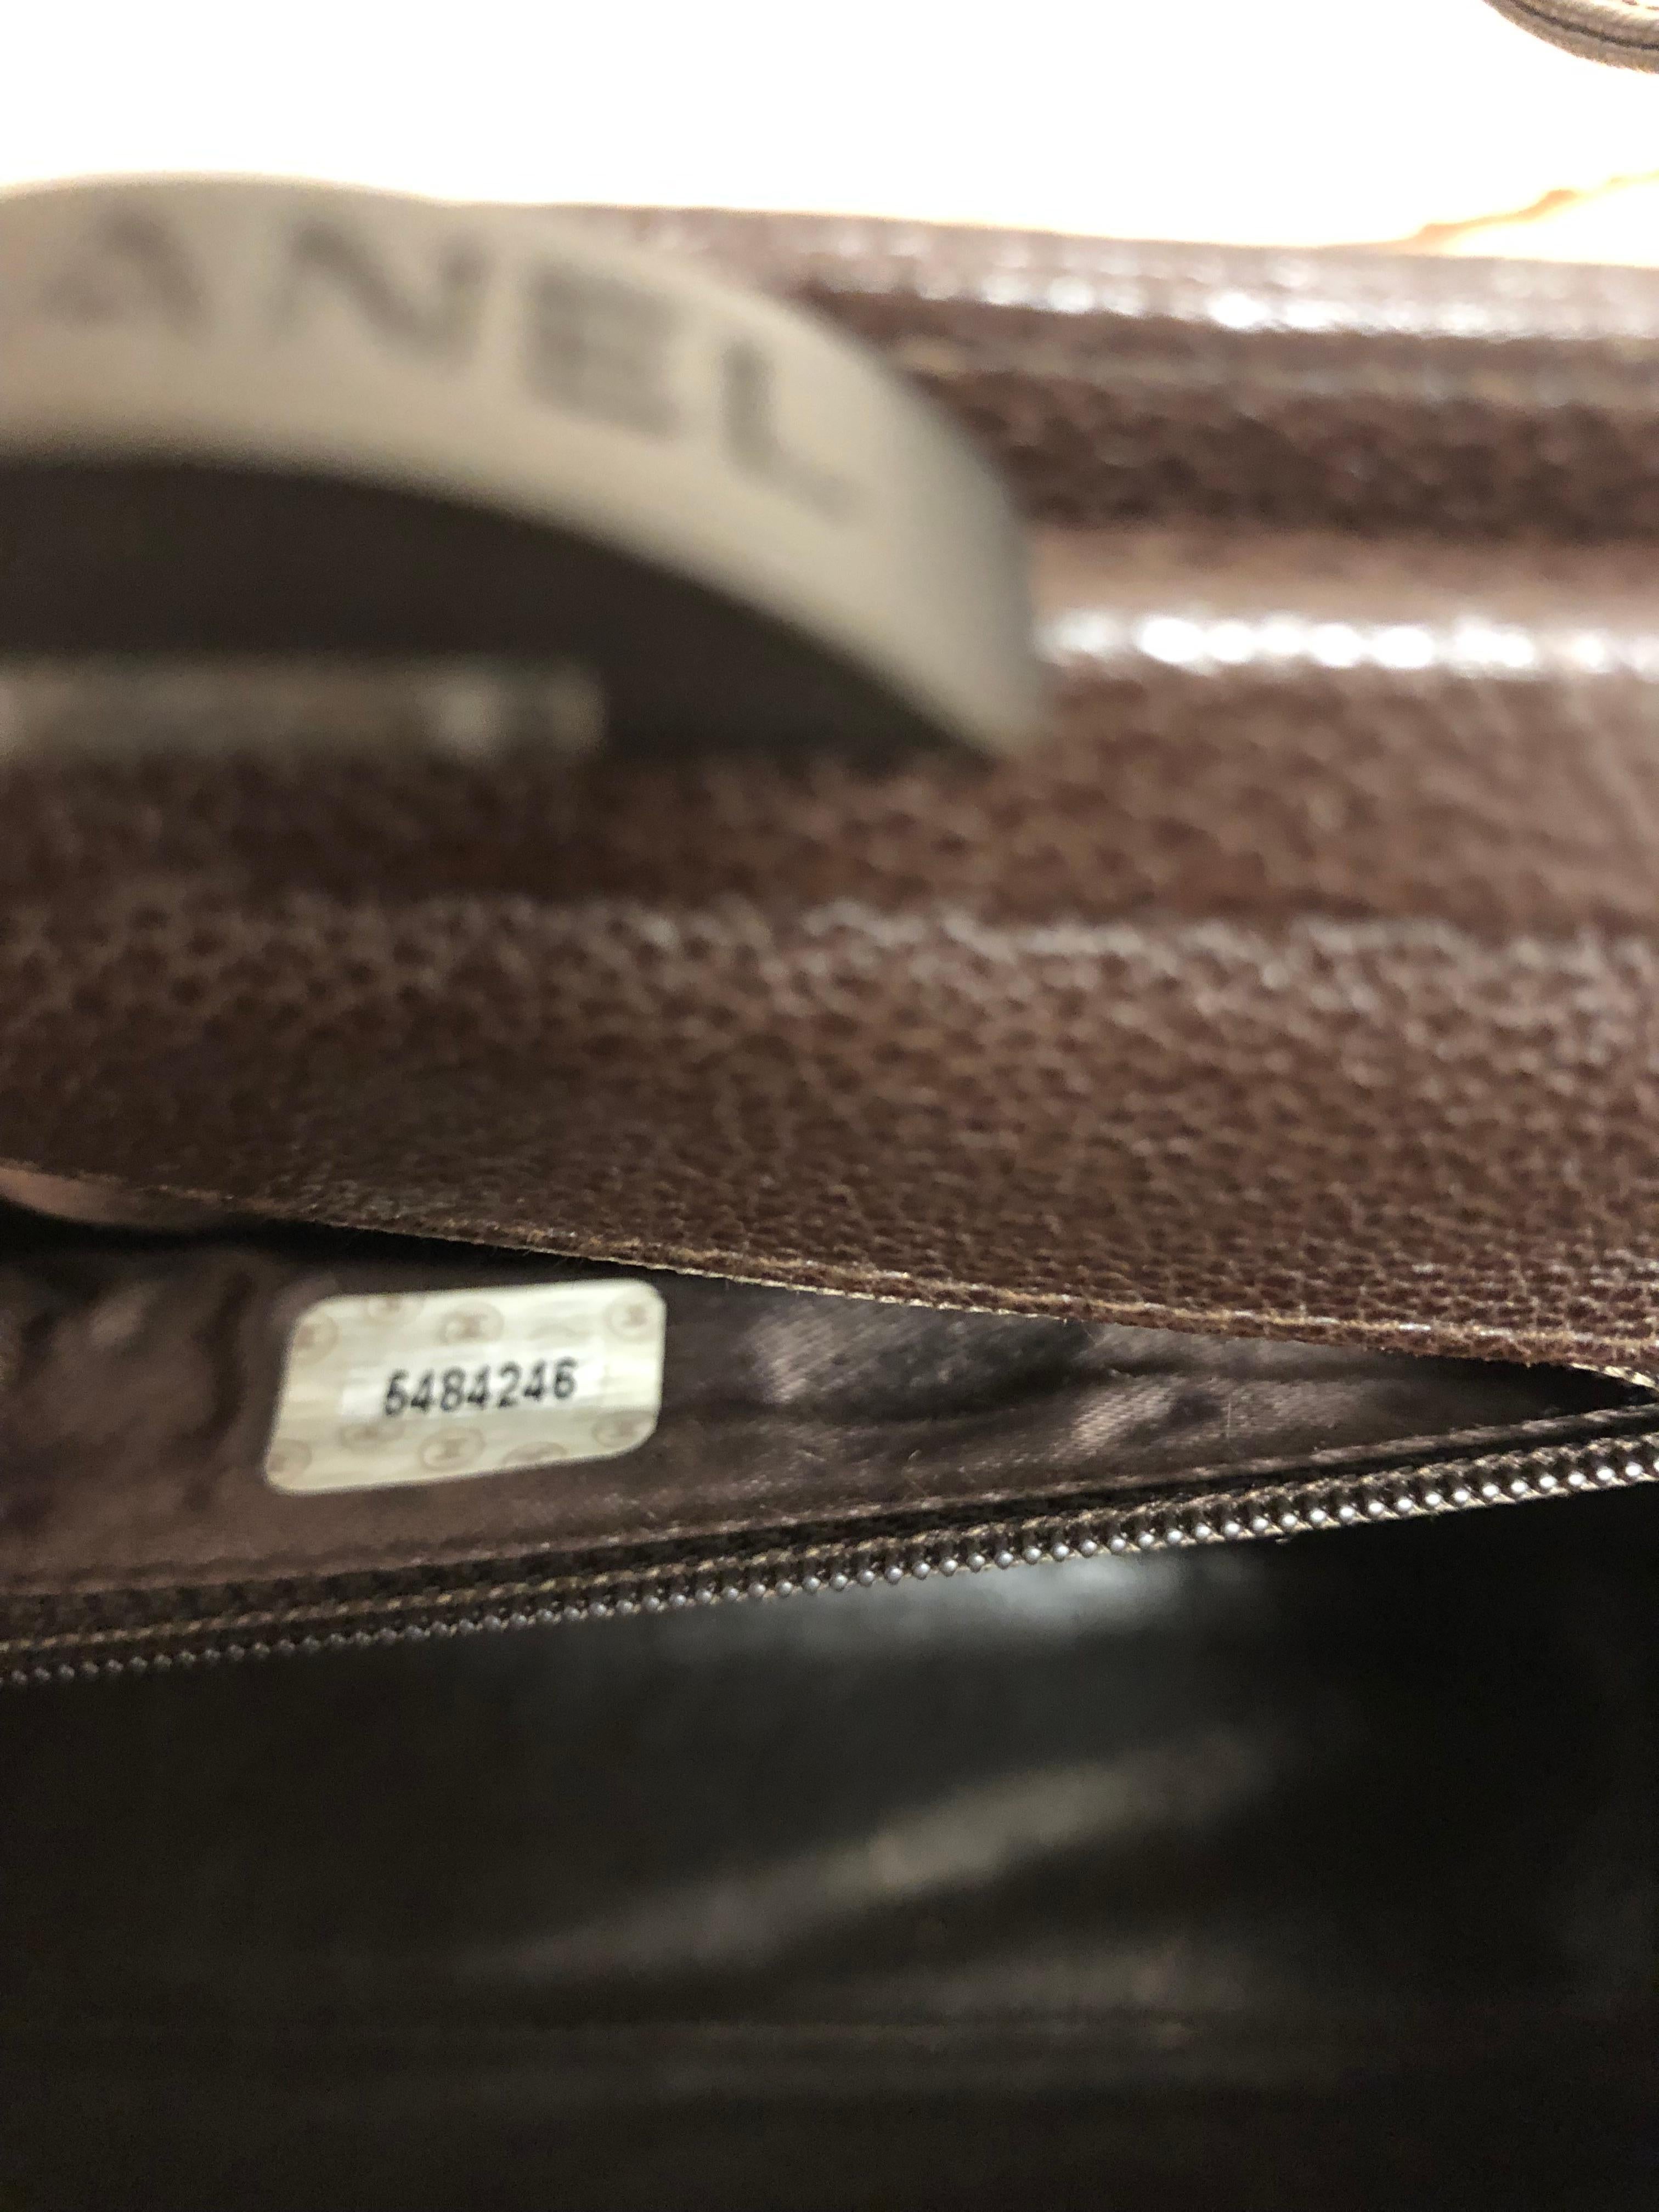 Chanel 1997-99 Deep Brown Caviar Leather Structured Handbag w/Dustbag 5484246 1